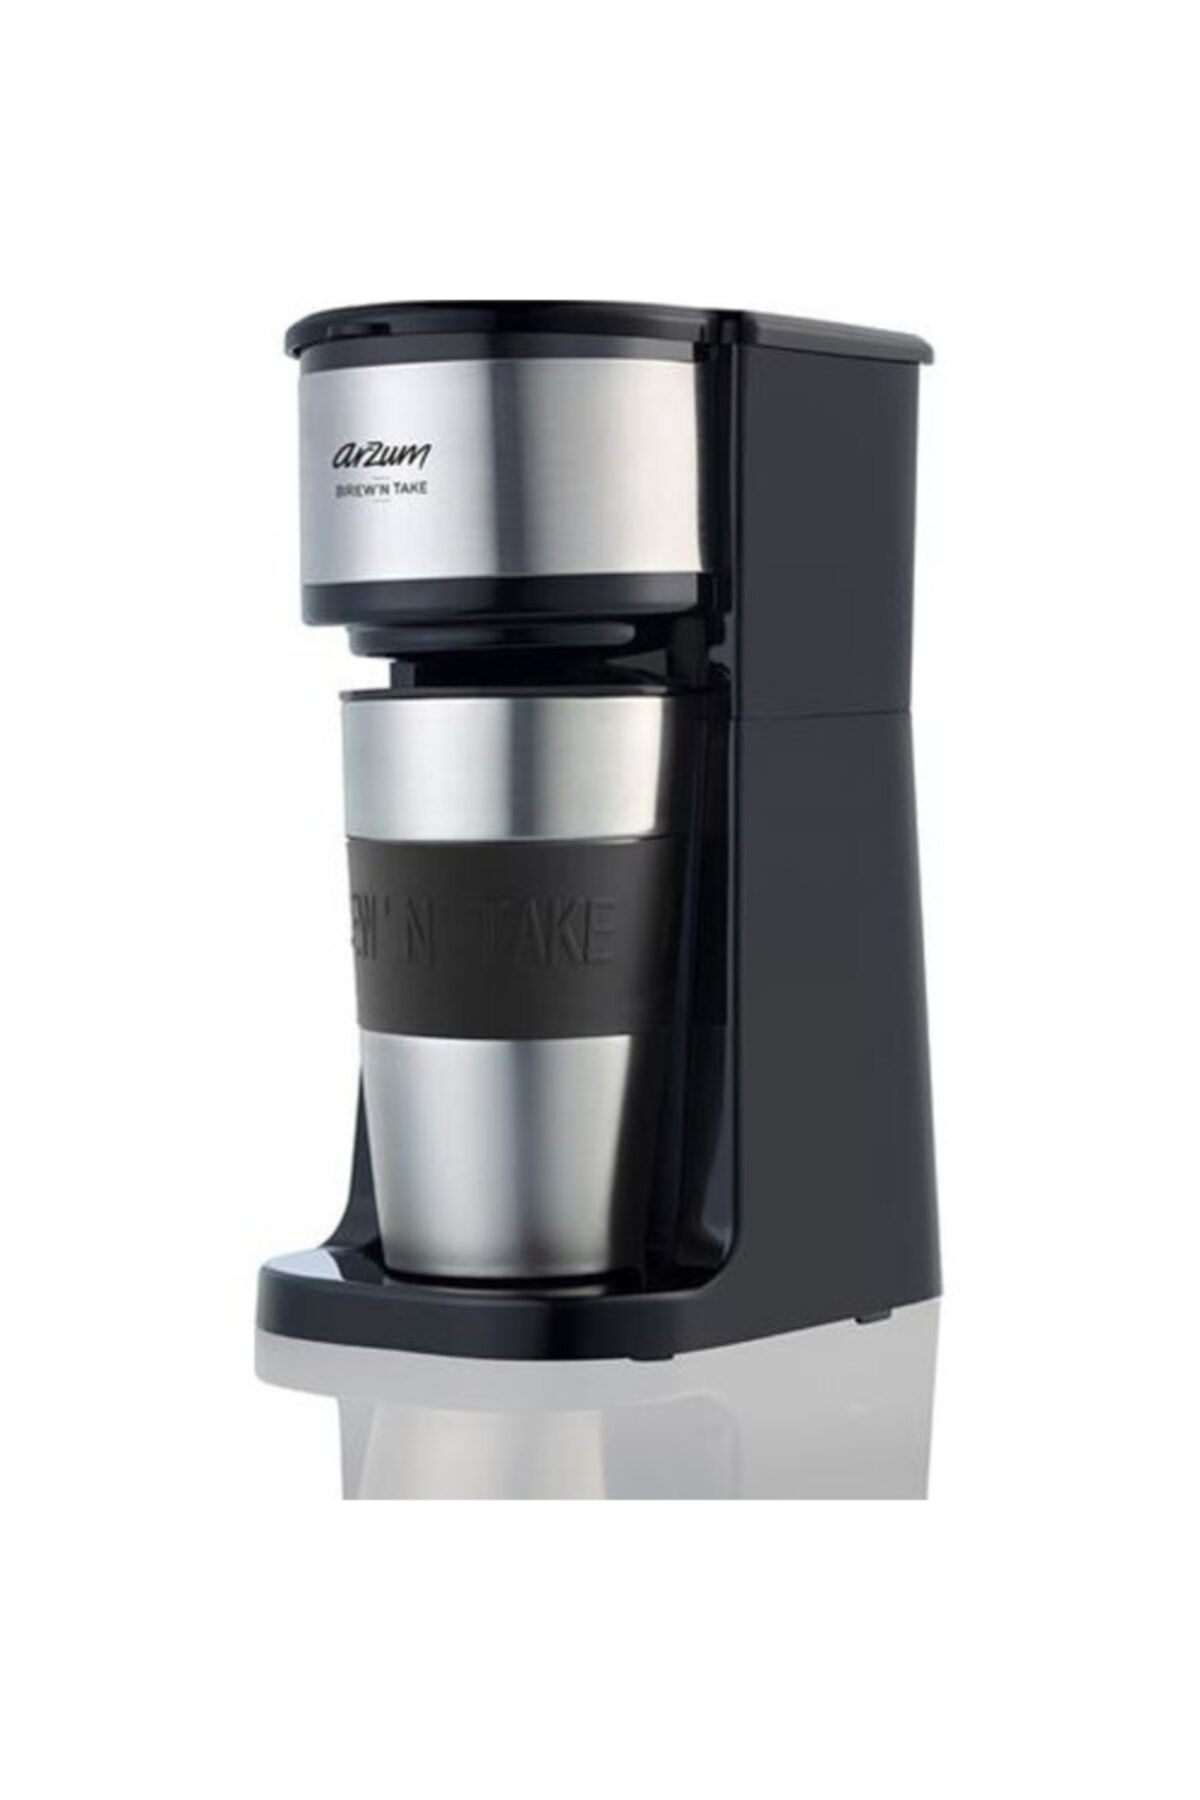 Arzum Ar3058 Brew’n Take Kişisel Filtre Kahve Makinesi